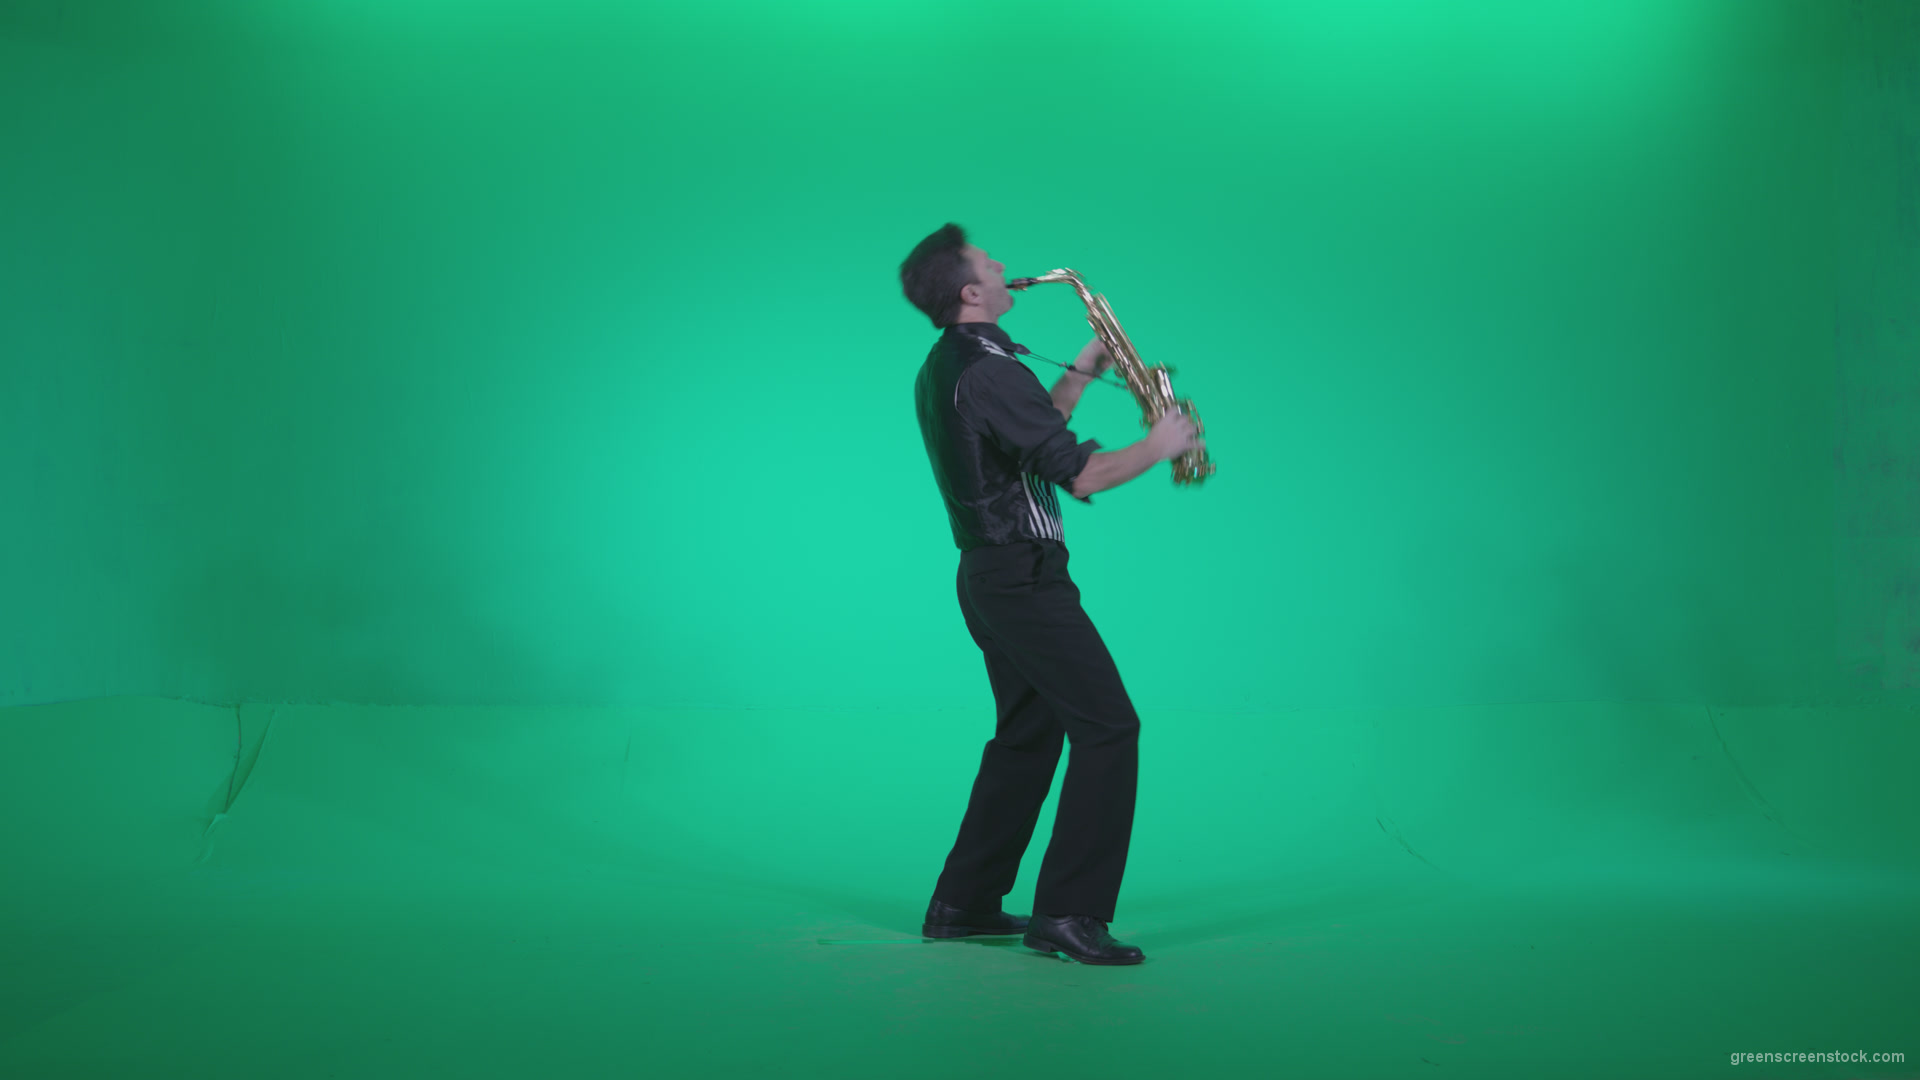 Saxophone-Virtuoso-Performer-s9-Green-Screen-Video-Footage_005 Green Screen Stock